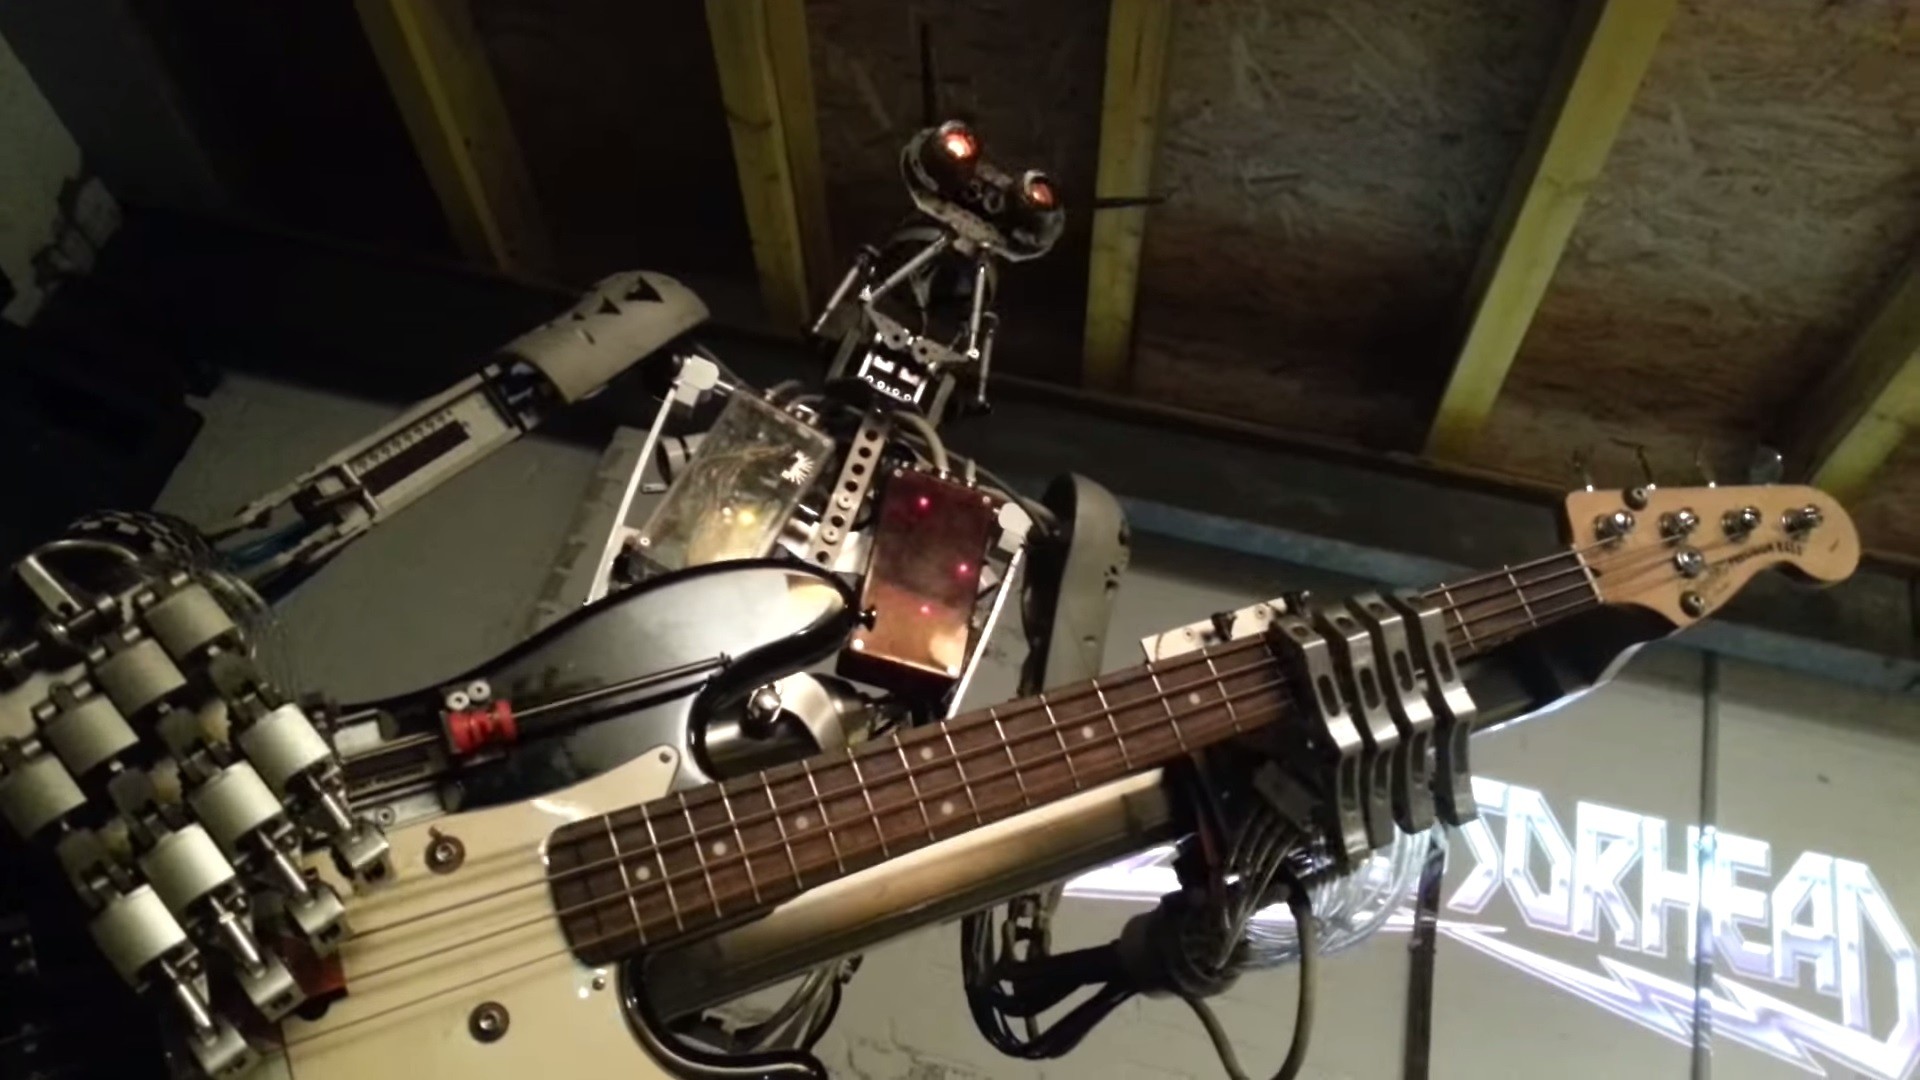 Robot Skull Playing Music Wallpapers